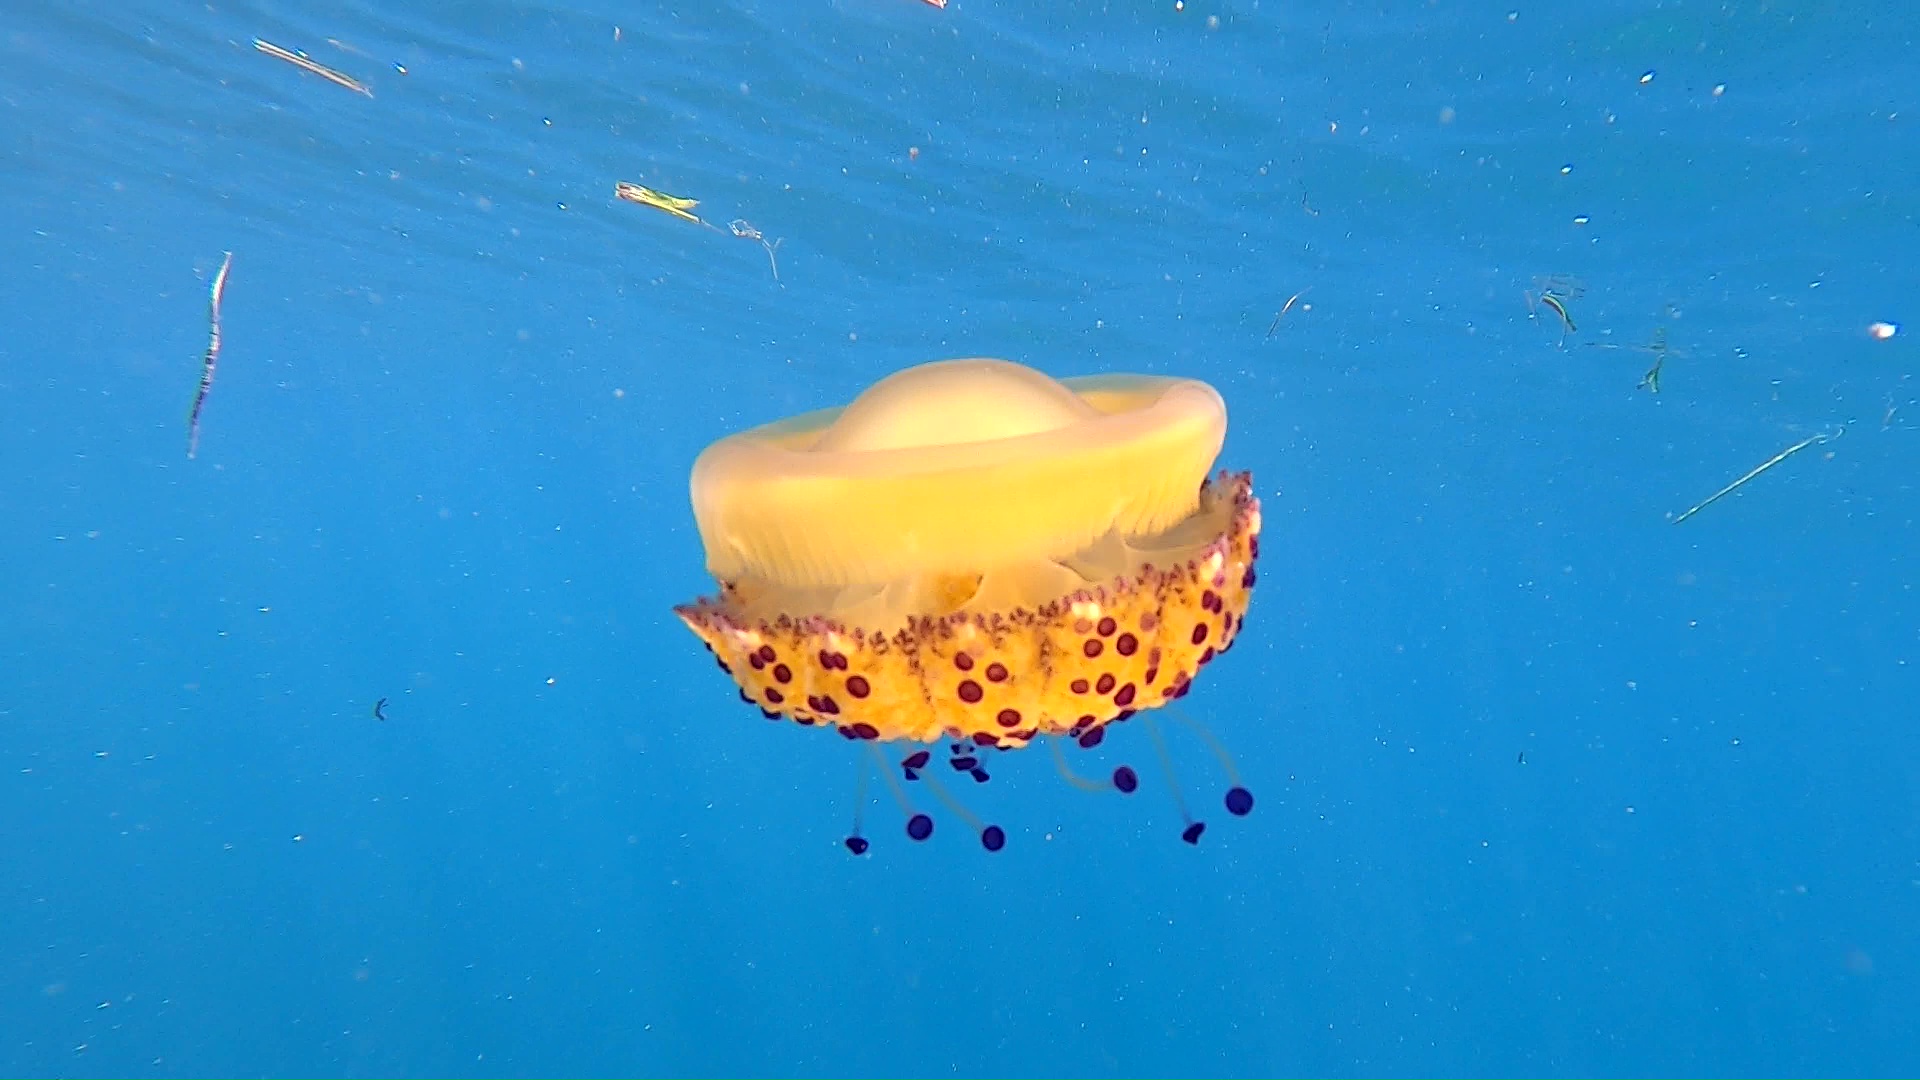 Mediterranean jellyfish or fried egg jellyfish - Cotylorhiza tuberculata intotheblue.it